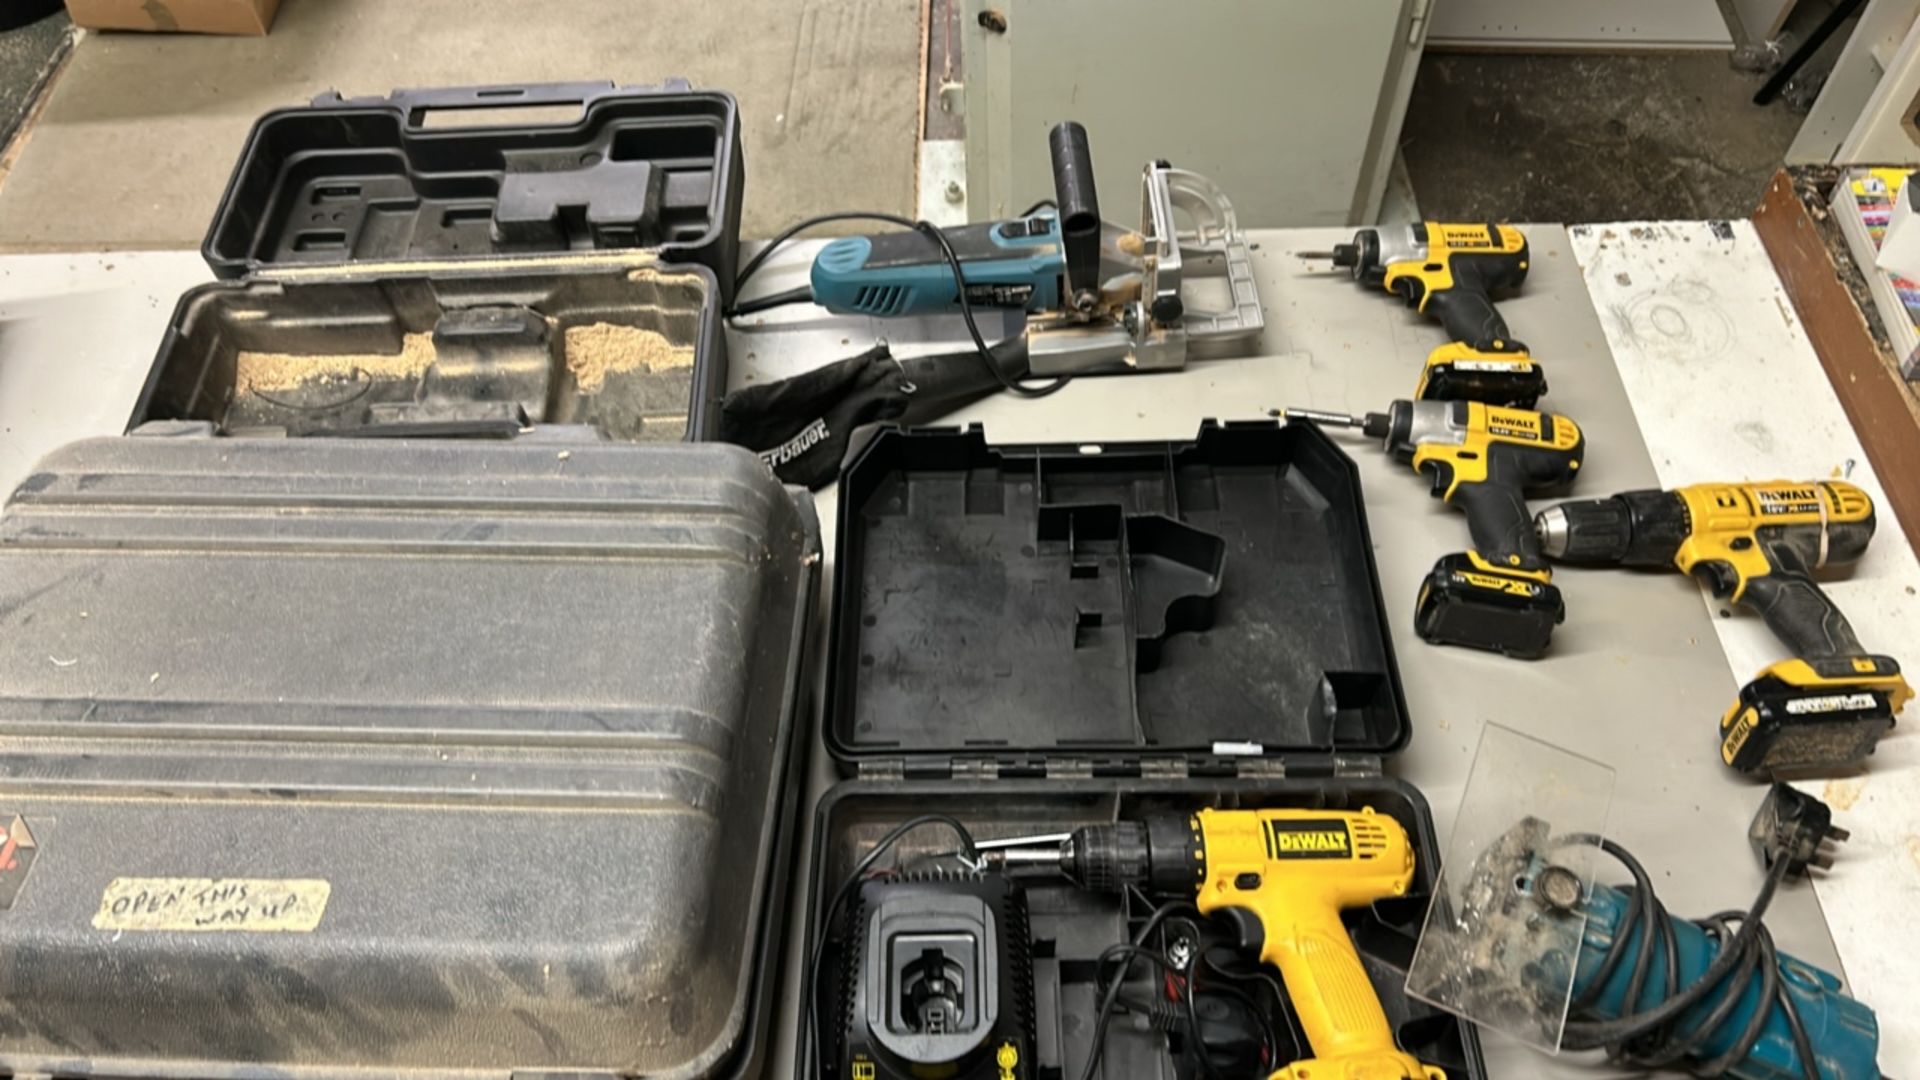 Quantity of power tools